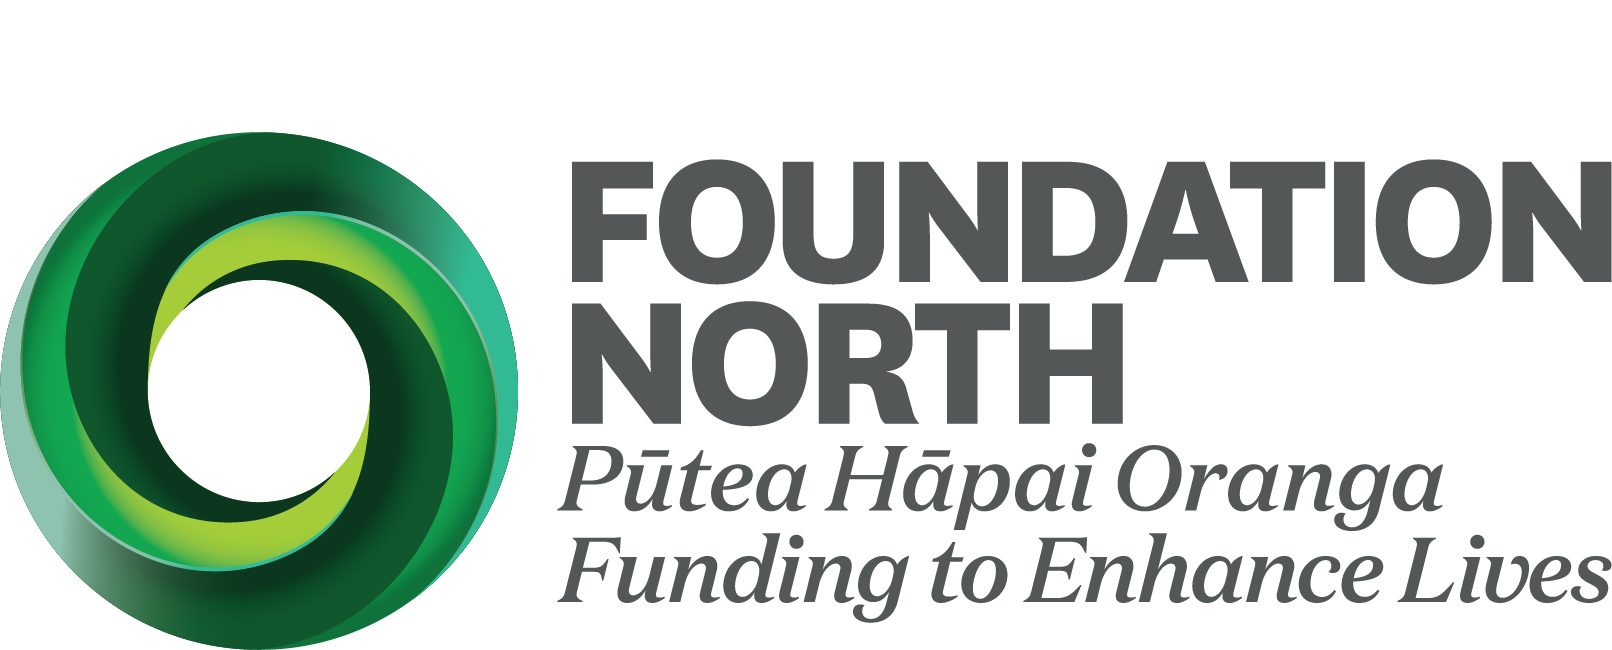 Foundation North Logo.png